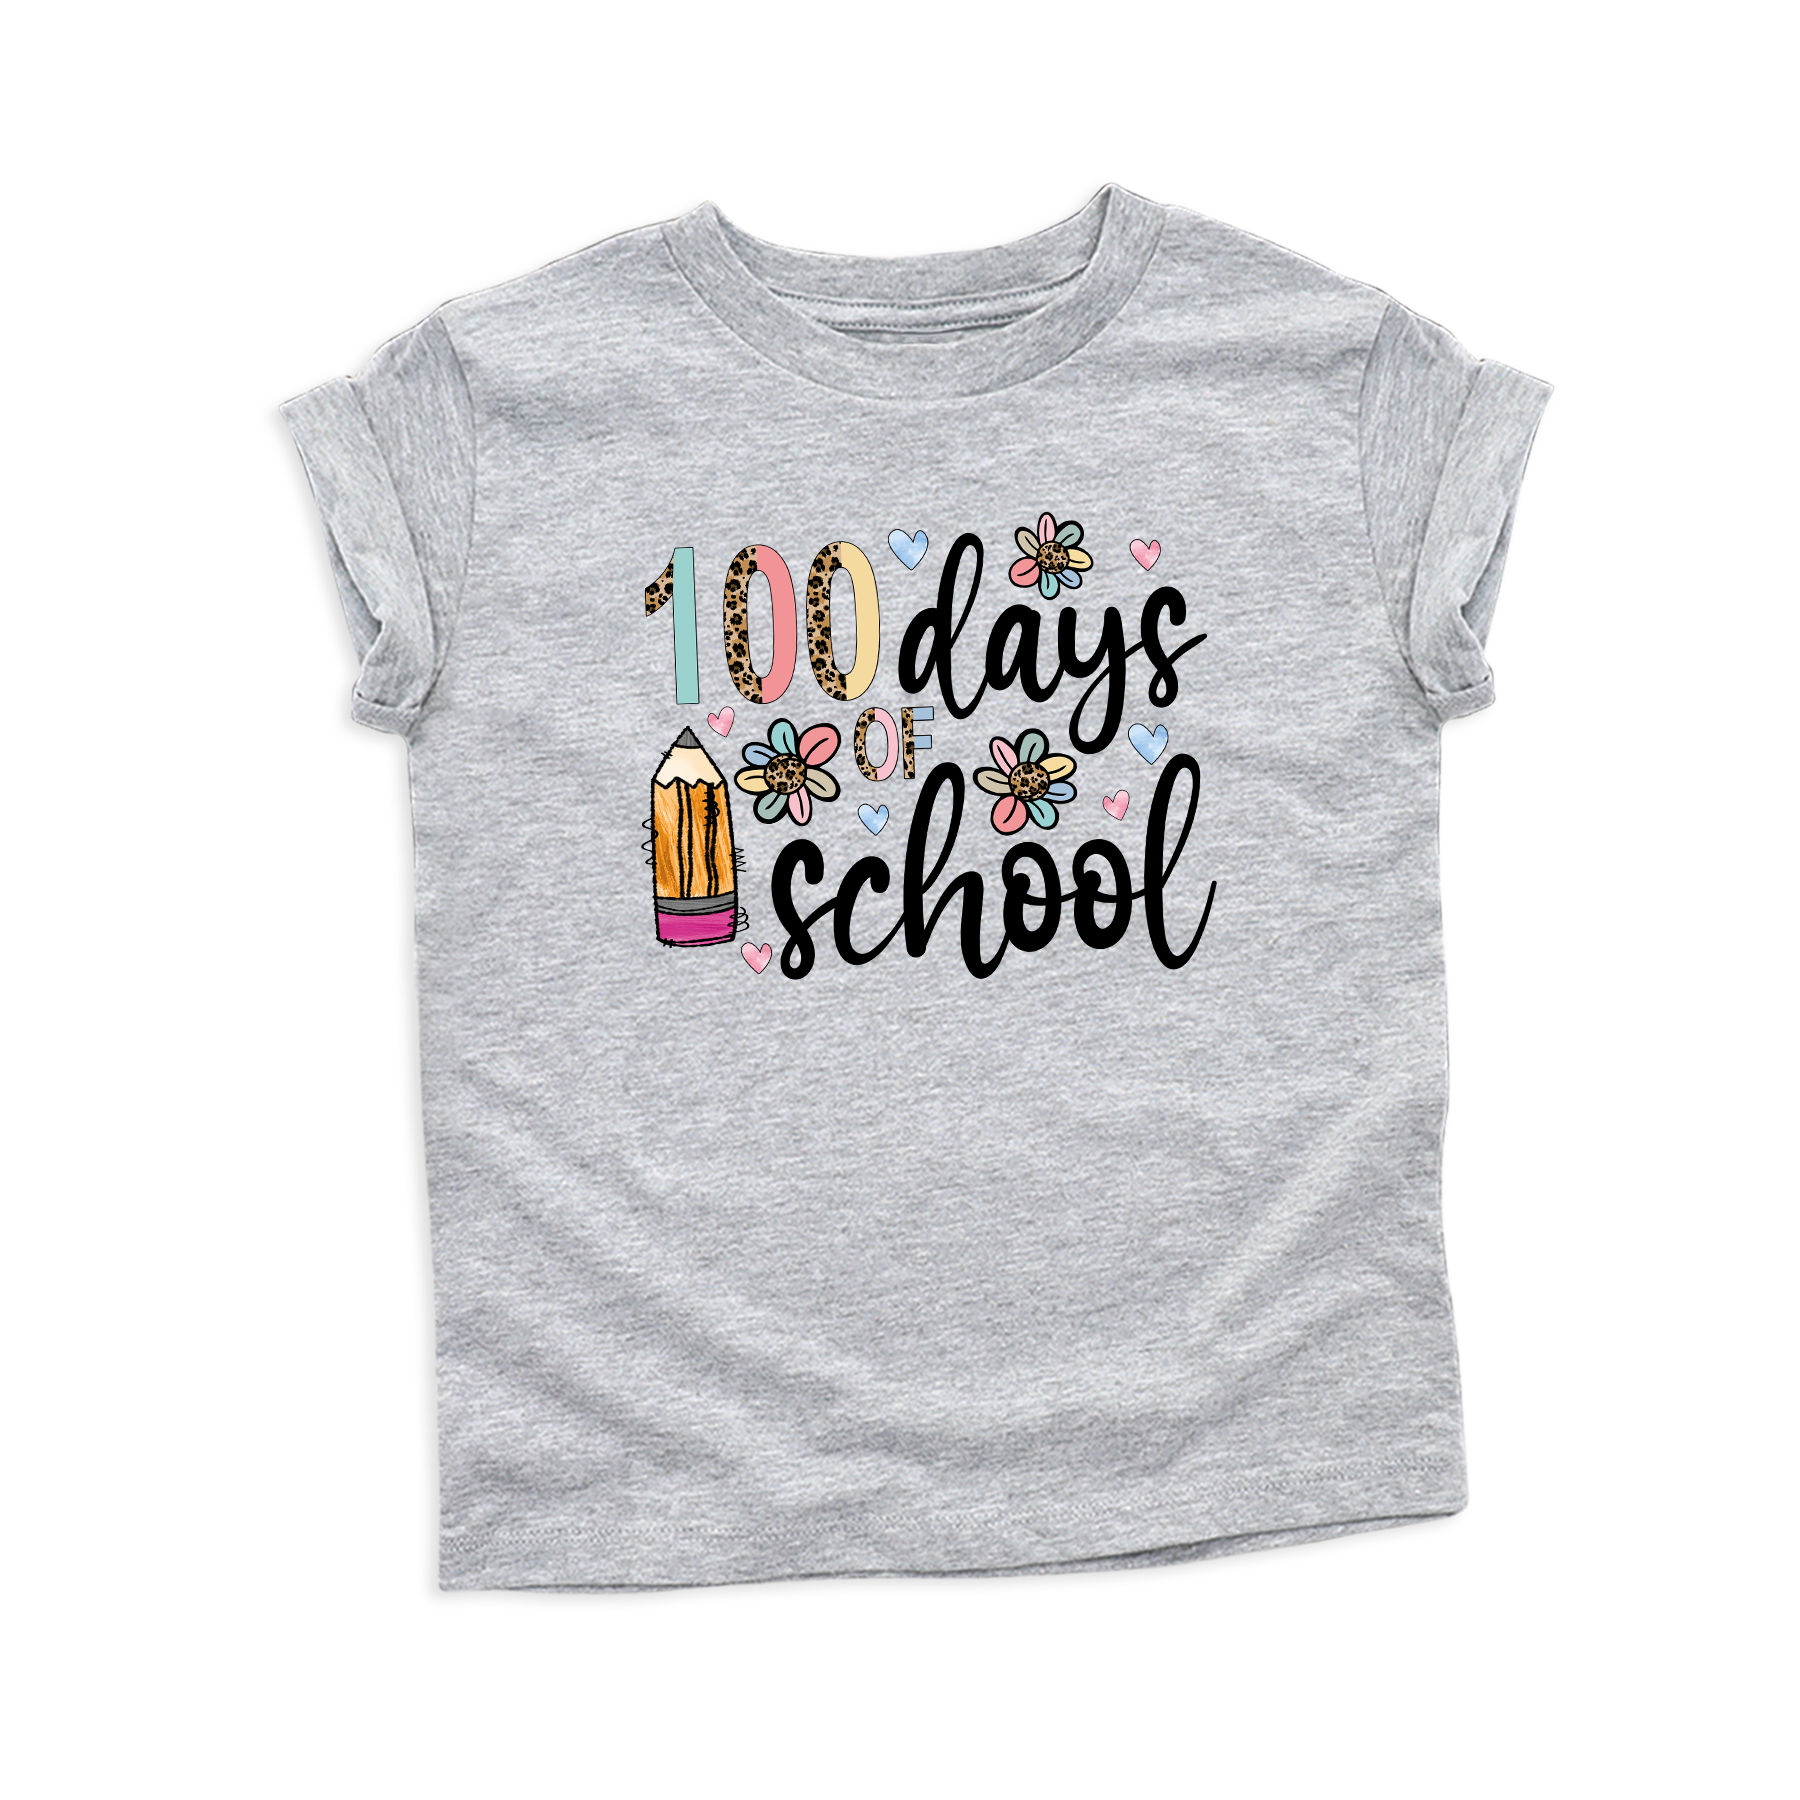 100 Days School Shirt